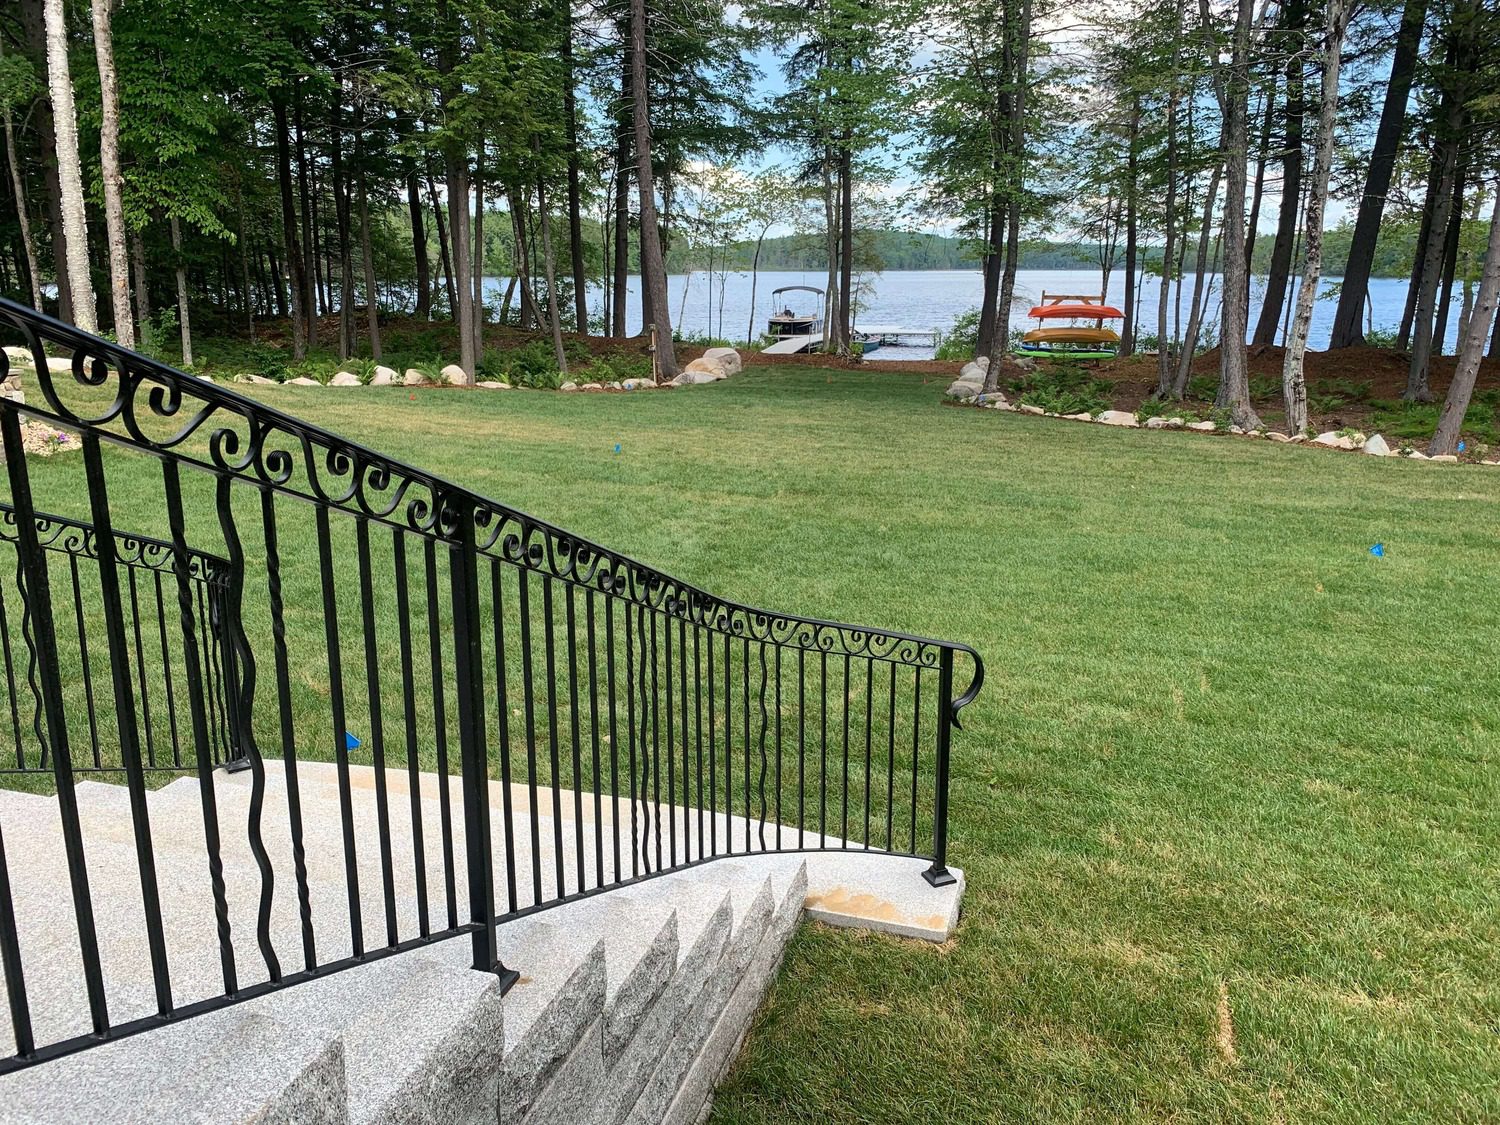 Handrails in Maine